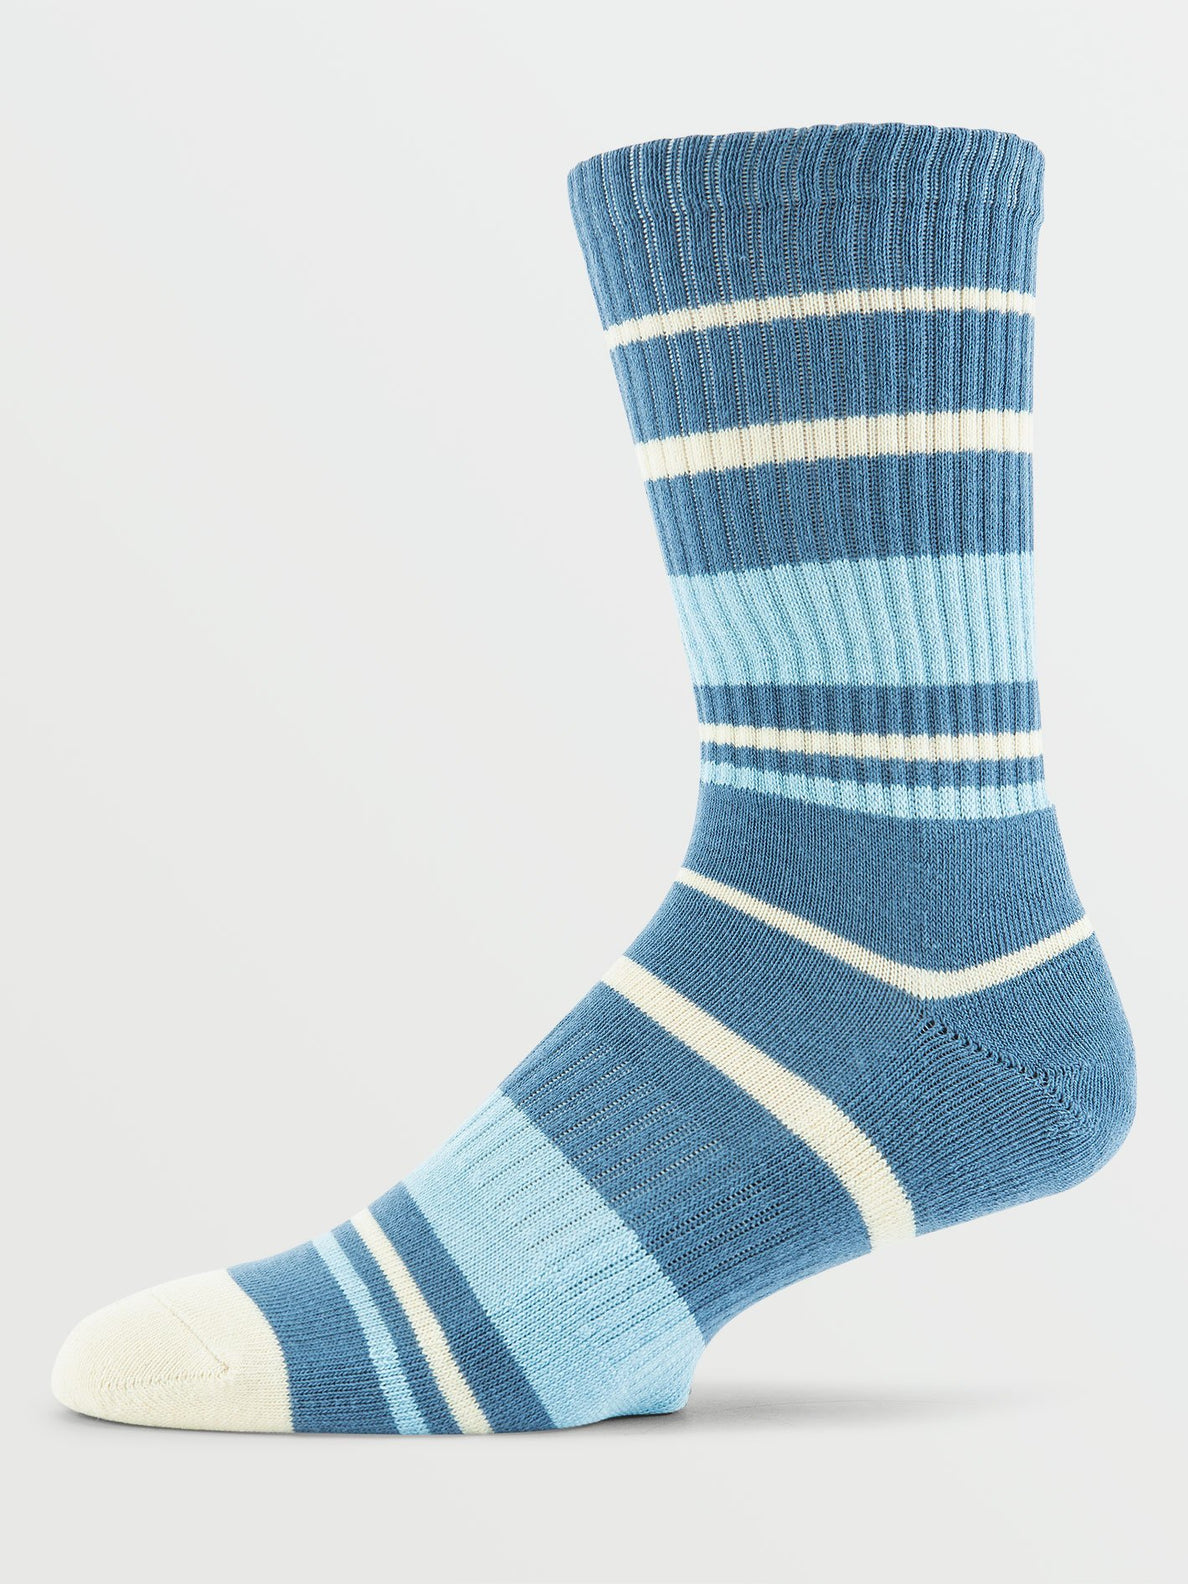 Vibes Socks - HORIZON BLUE